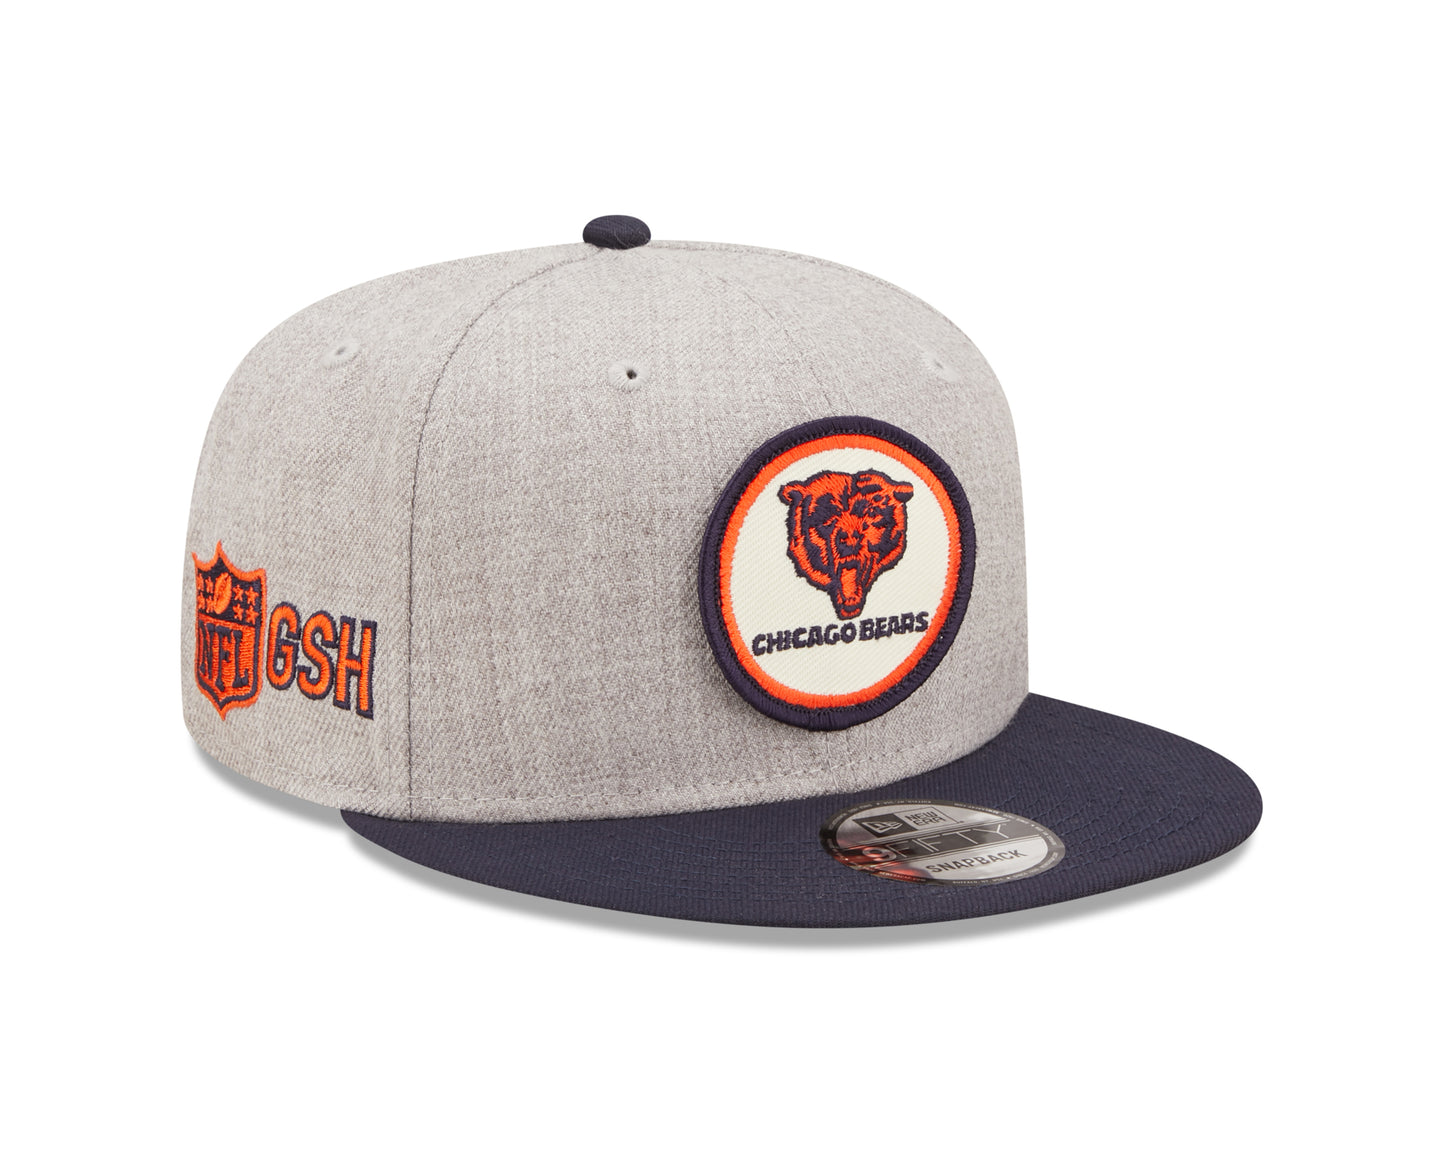 Chicago Bears NFL New Era Sideline Historic 9FIFTY Snapback Hat - Heather